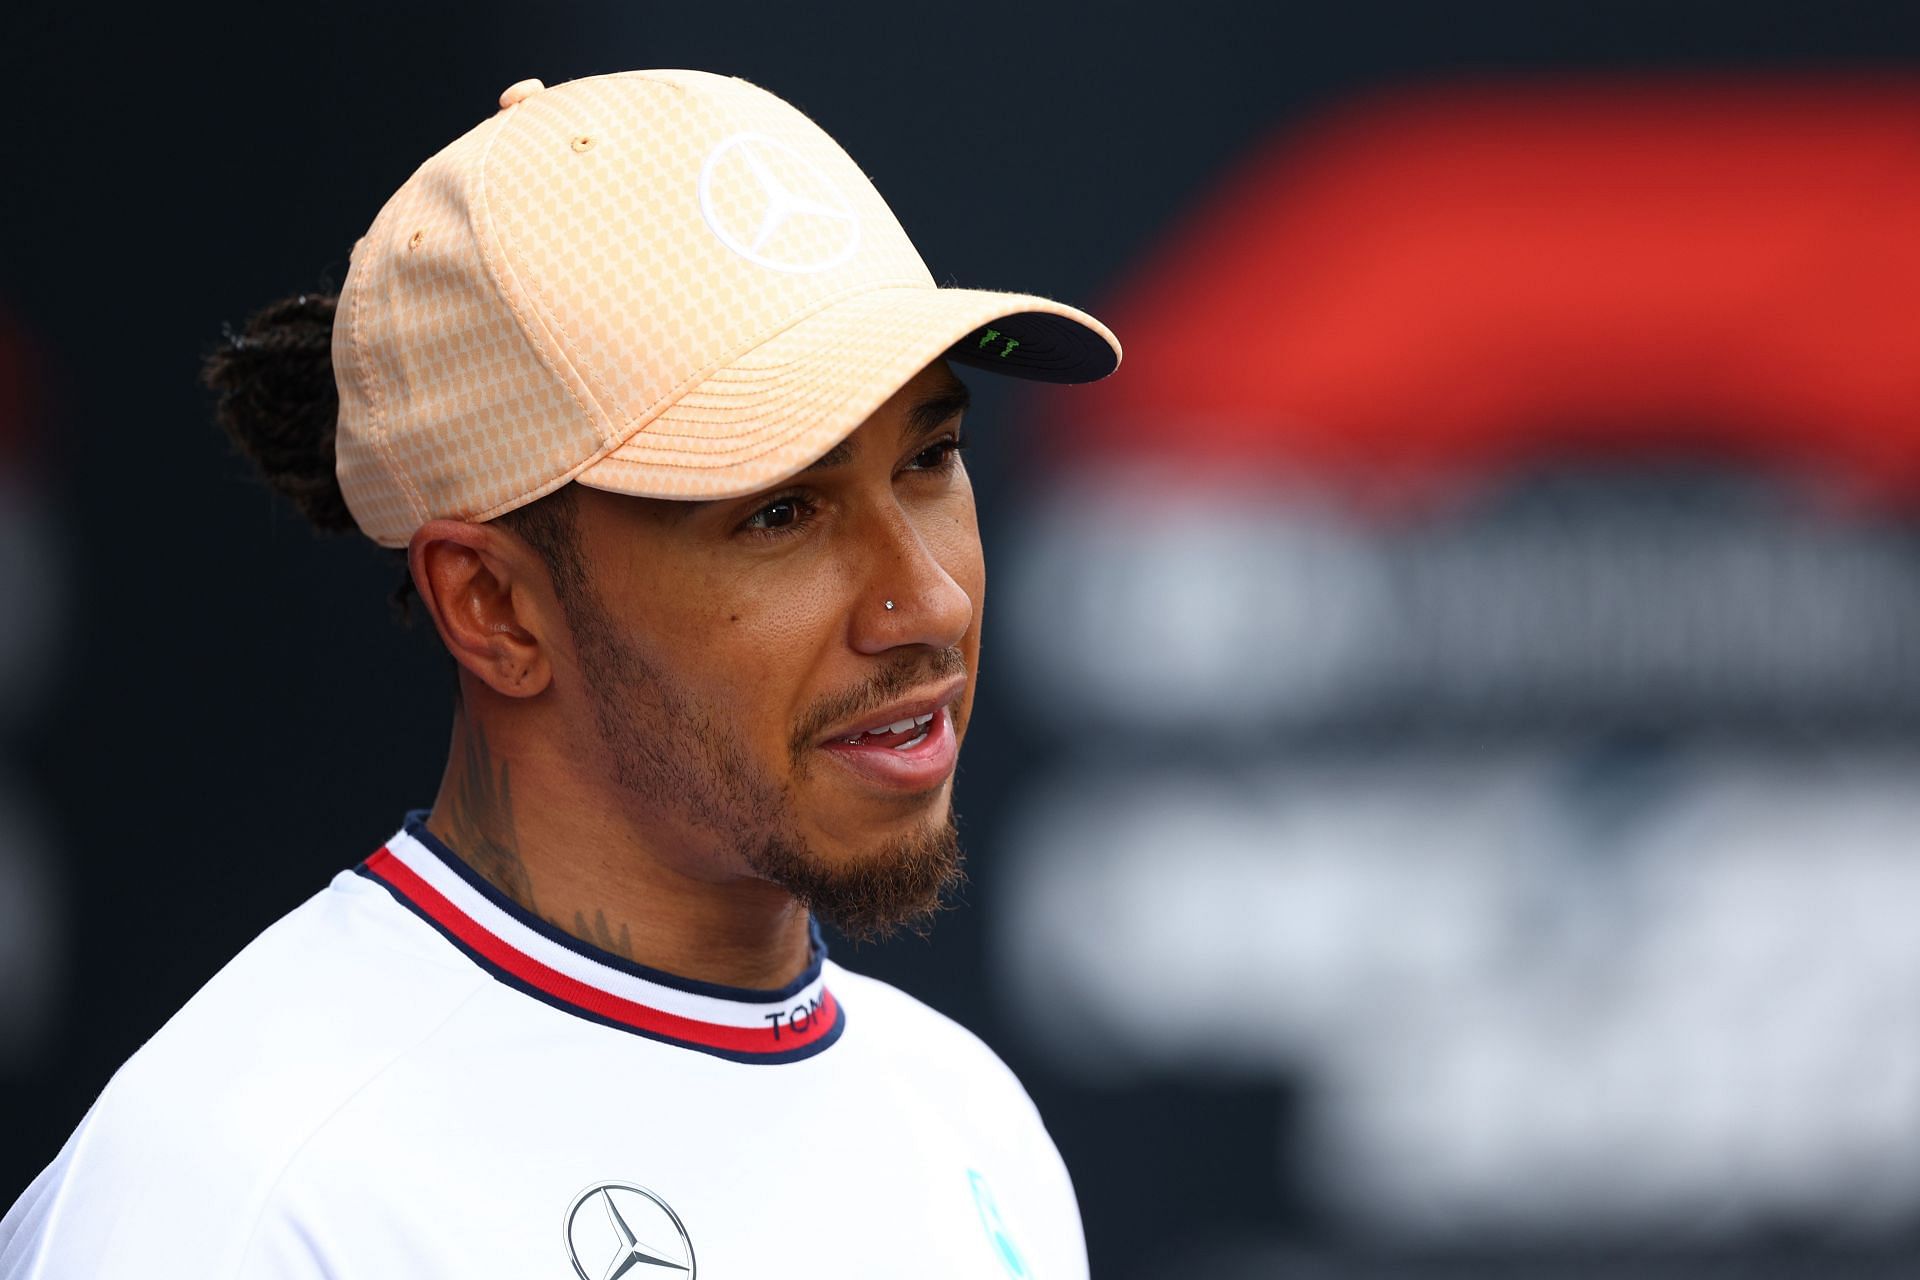 British GP home hero Lewis Hamilton